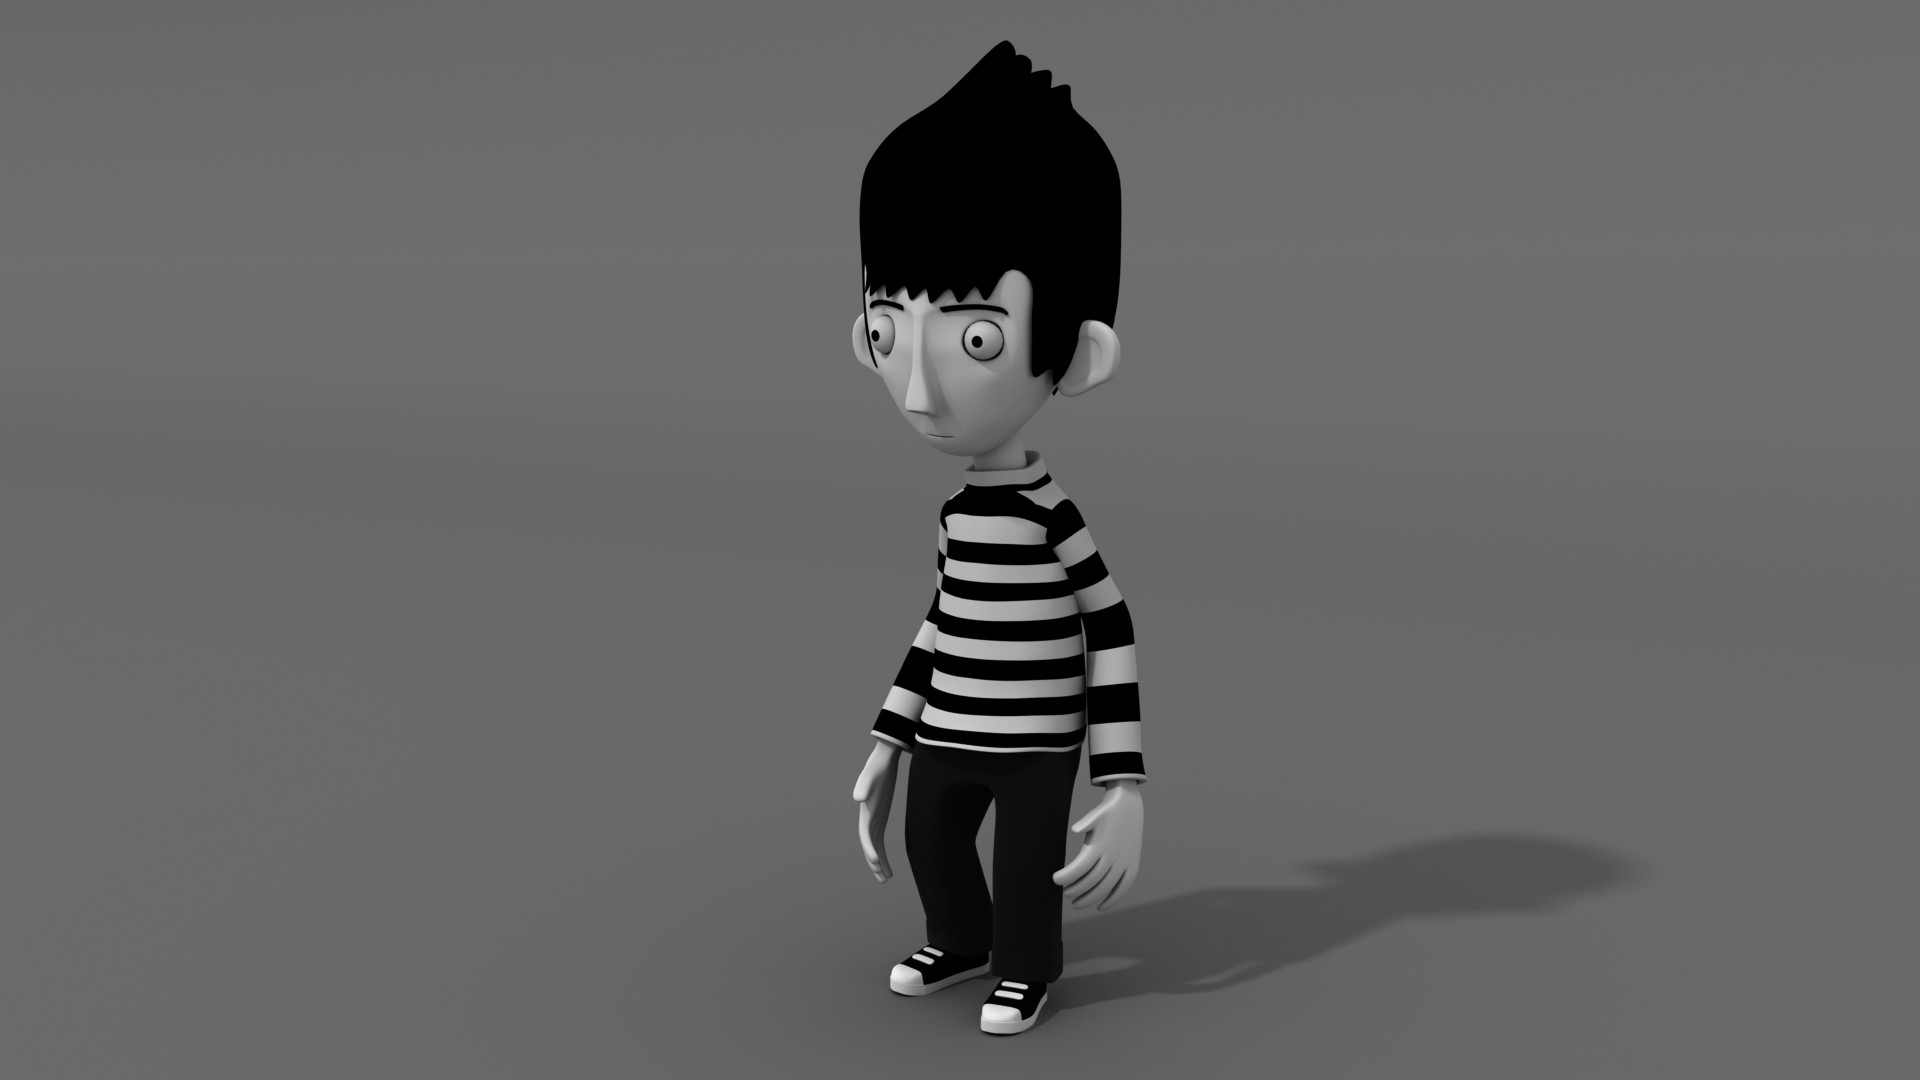 ArtStation - Cartoon character: The sad boy